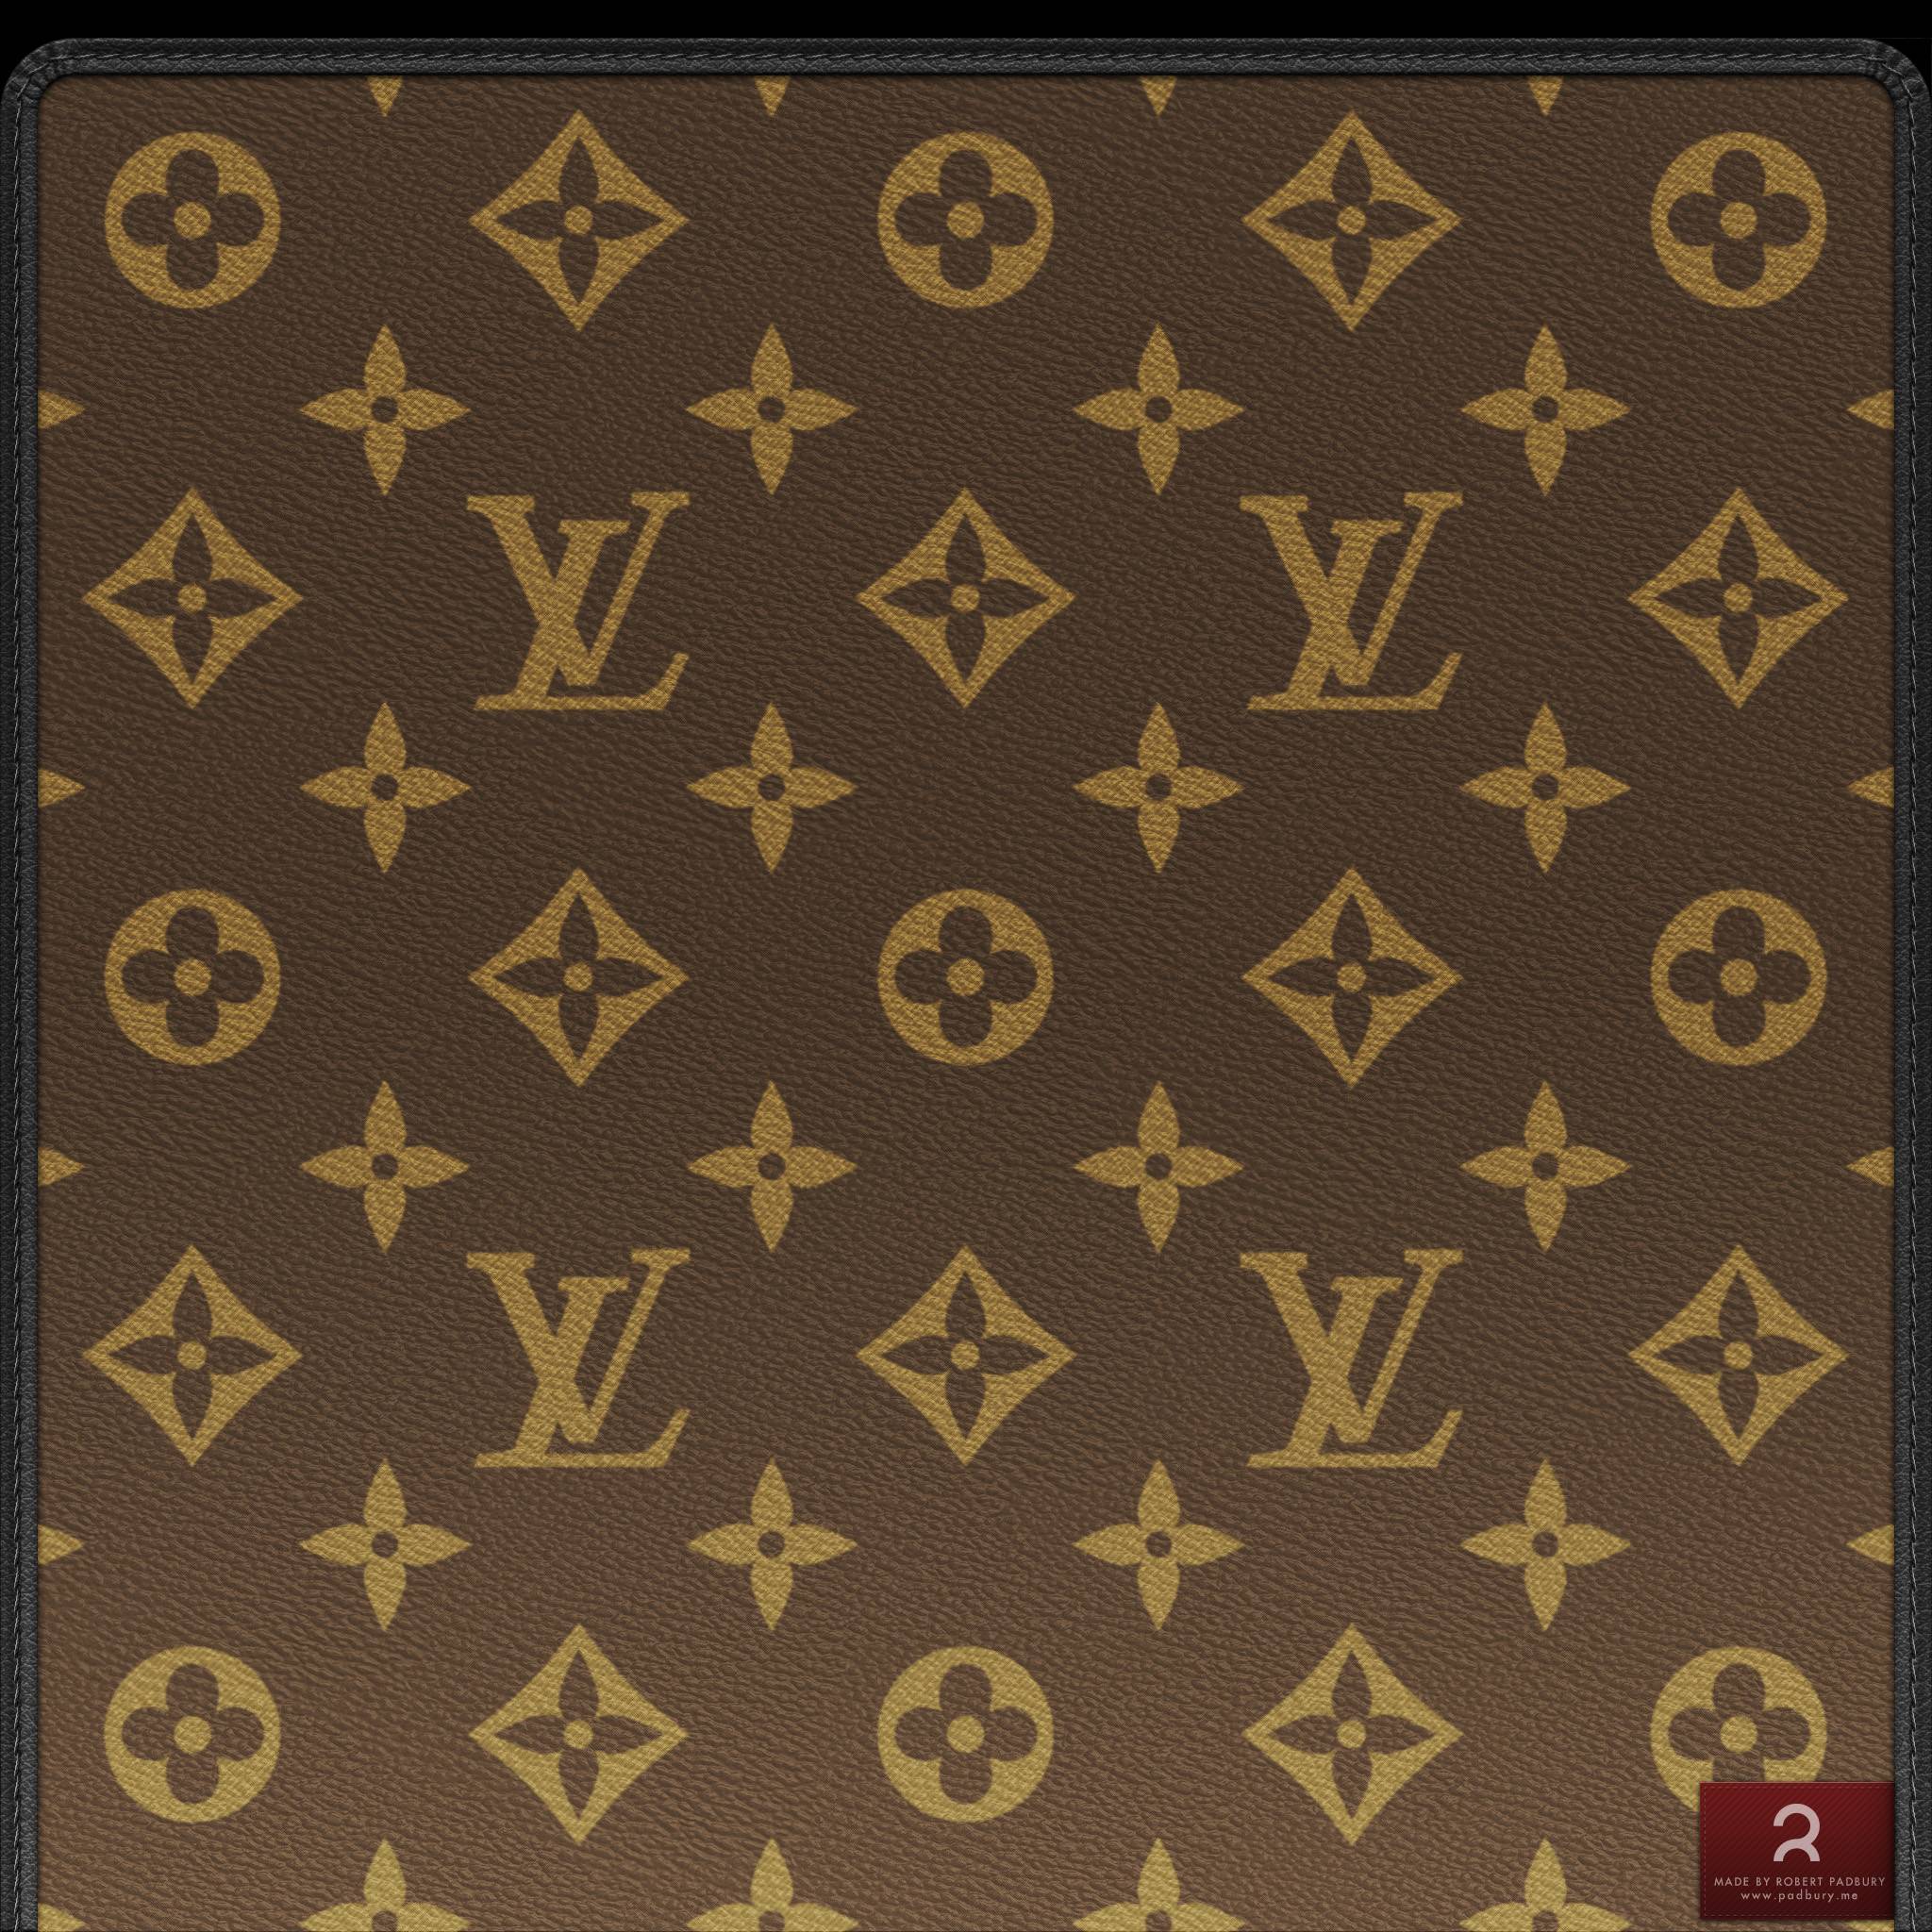 Download Brown Aesthetic Louis Vuitton Phone Wallpaper